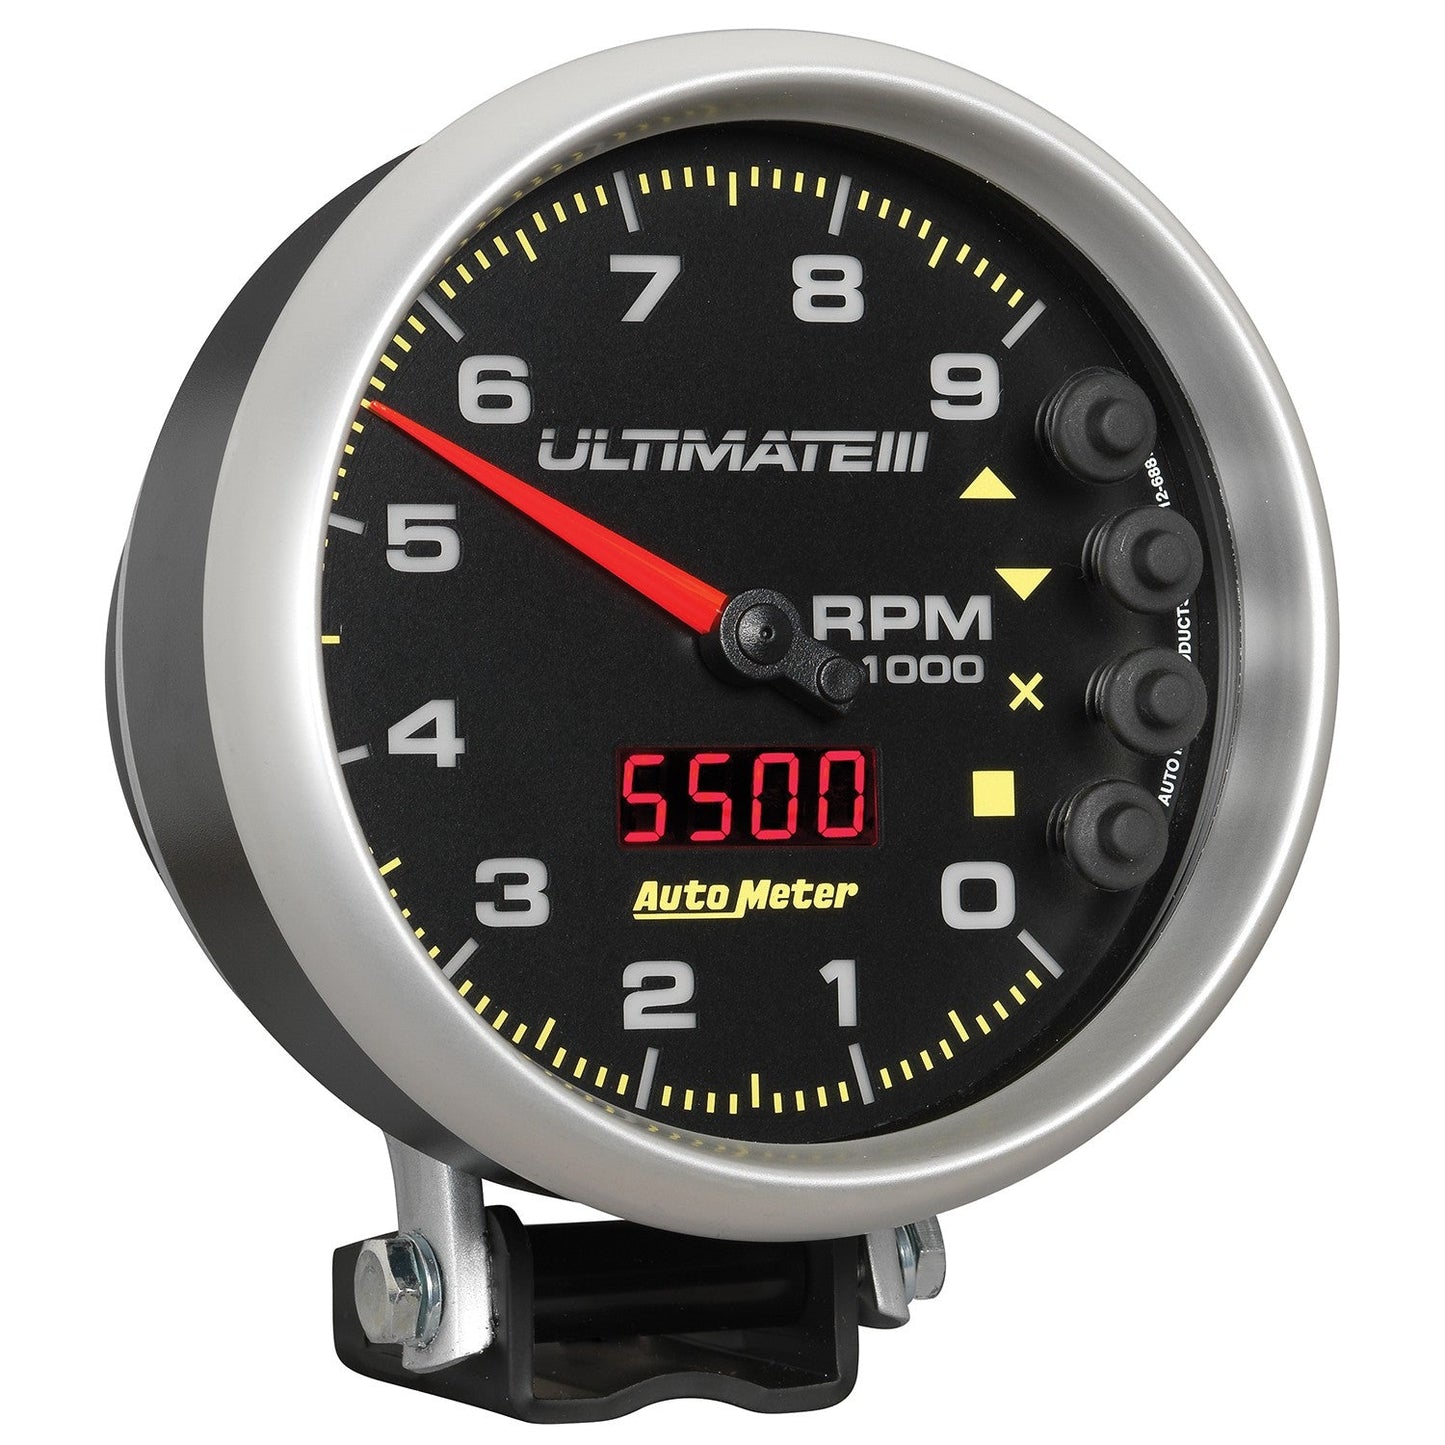 AutoMeter - 5" TACHOMETER, 0-9000 RPM, PEDESTAL, ULTIMATE III PLAYBACK, BLACK (6887)